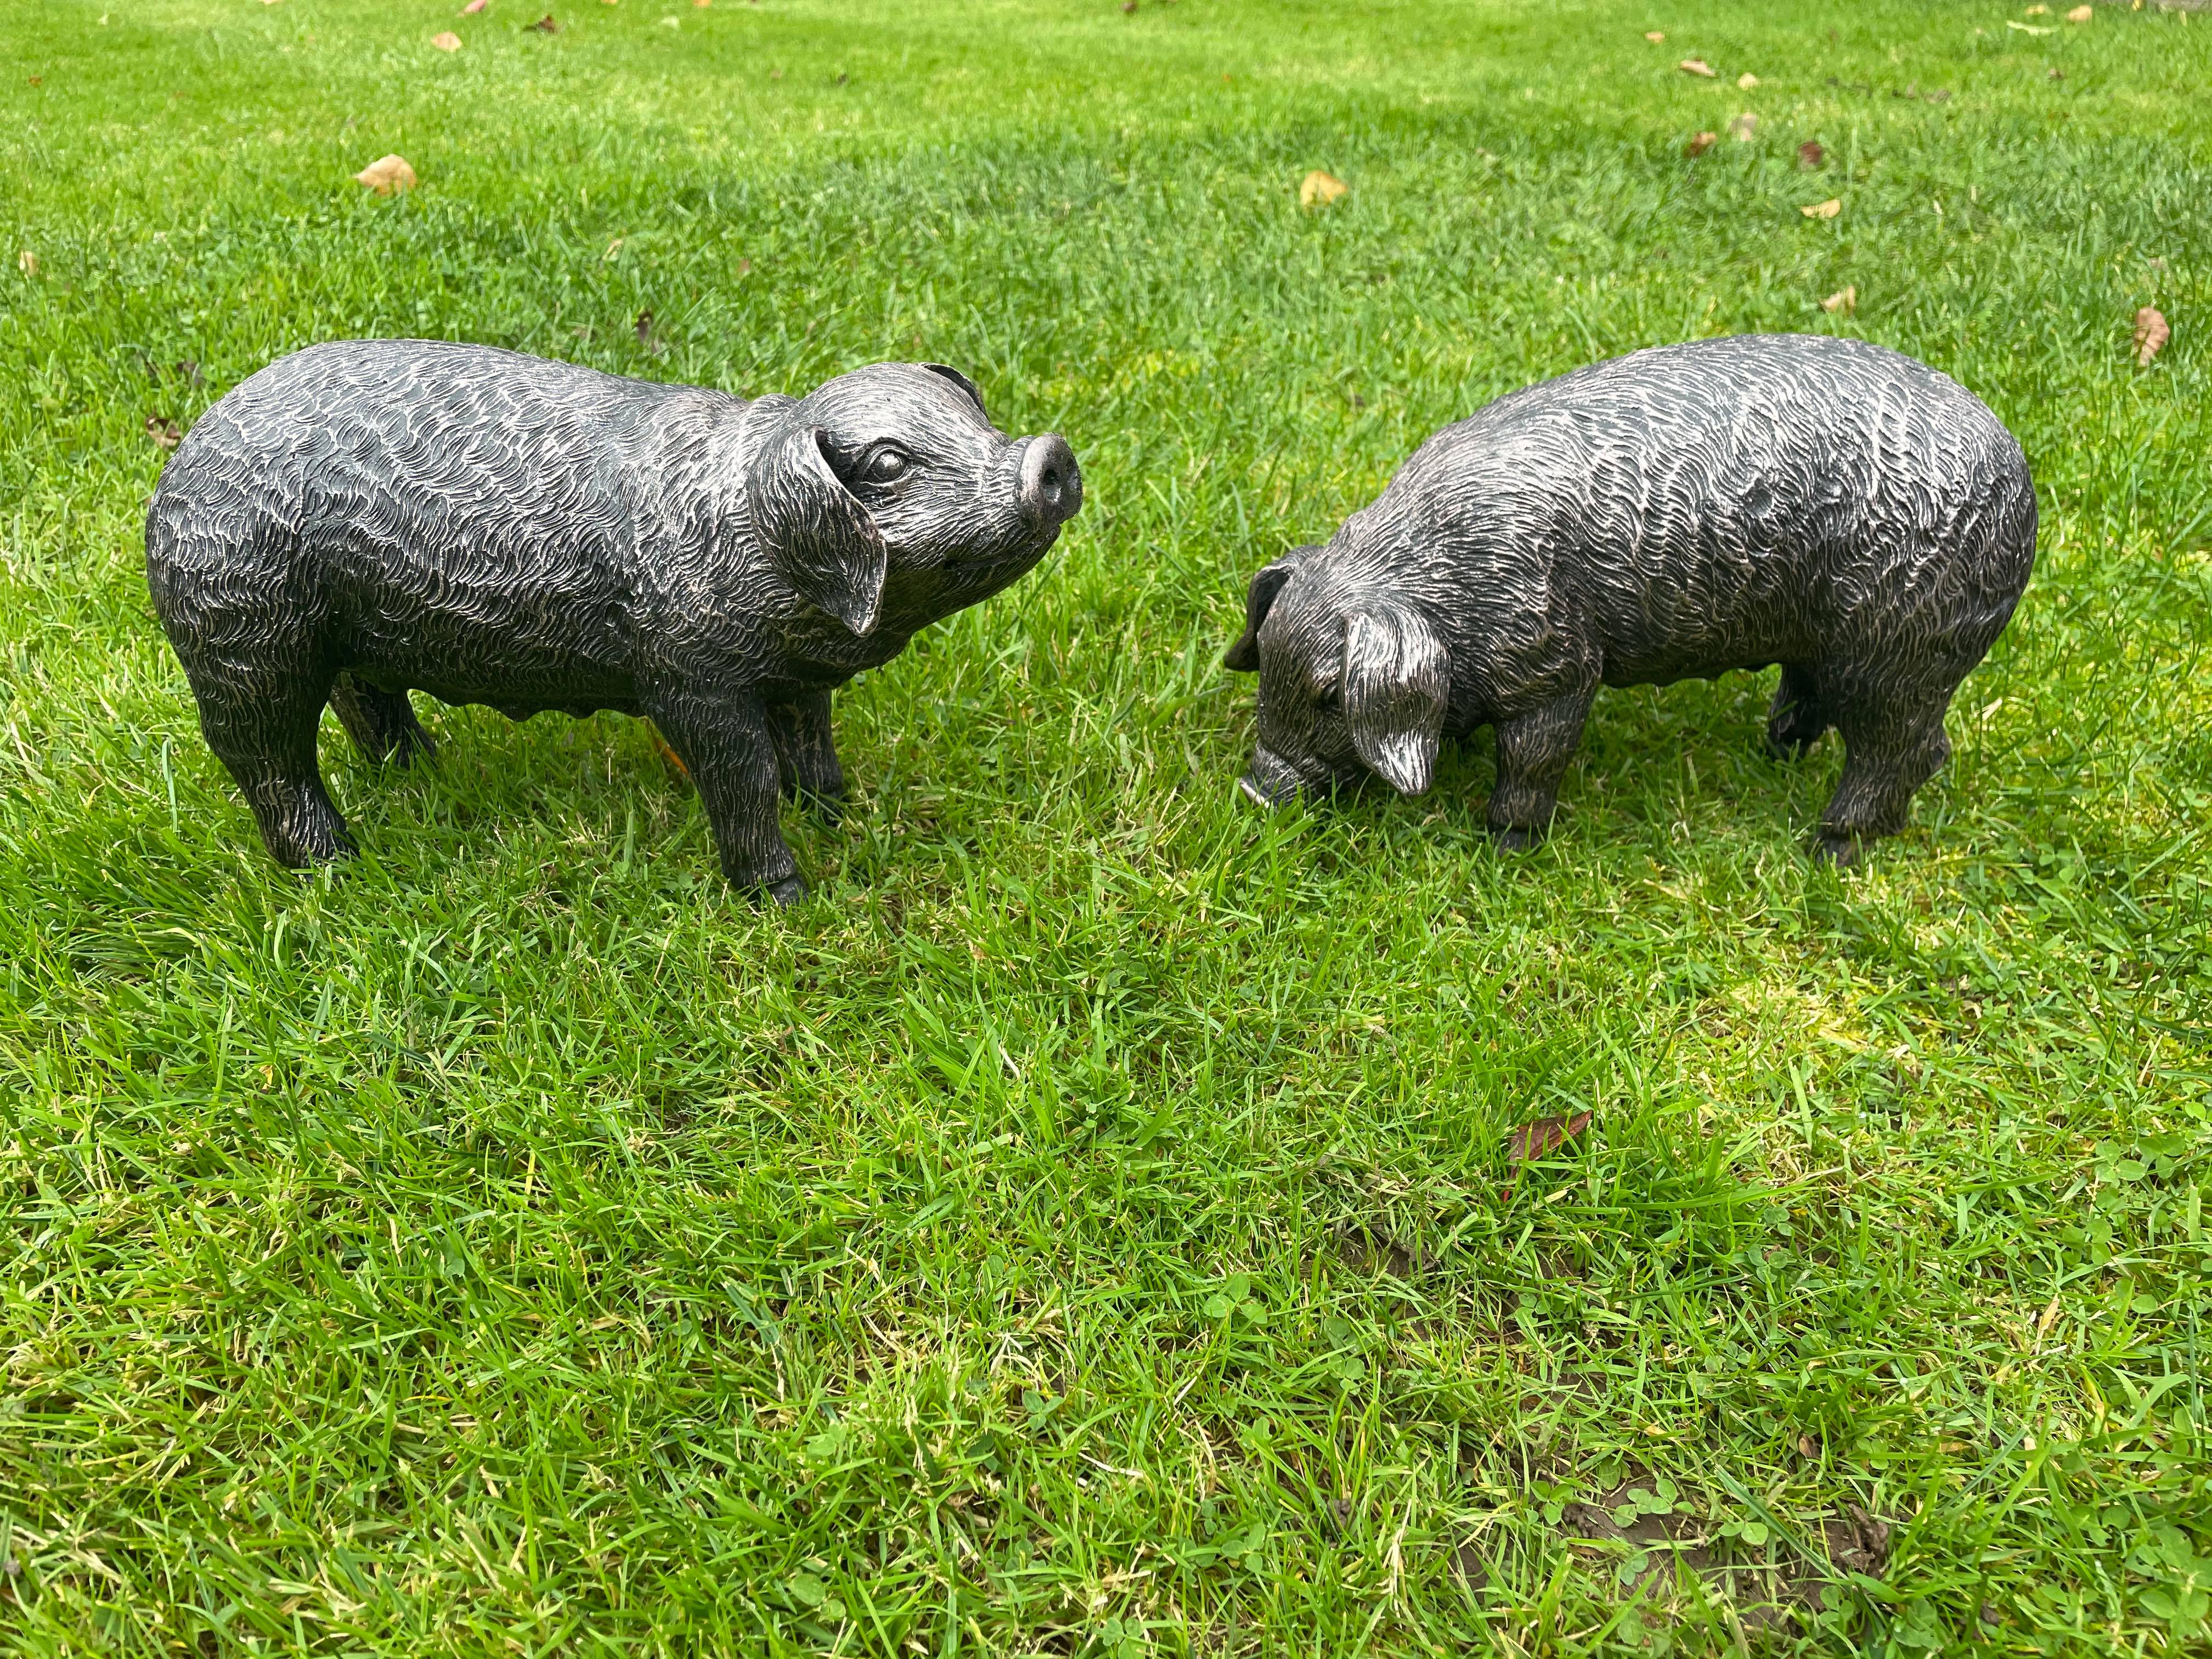 Pair of Bronze Pigs